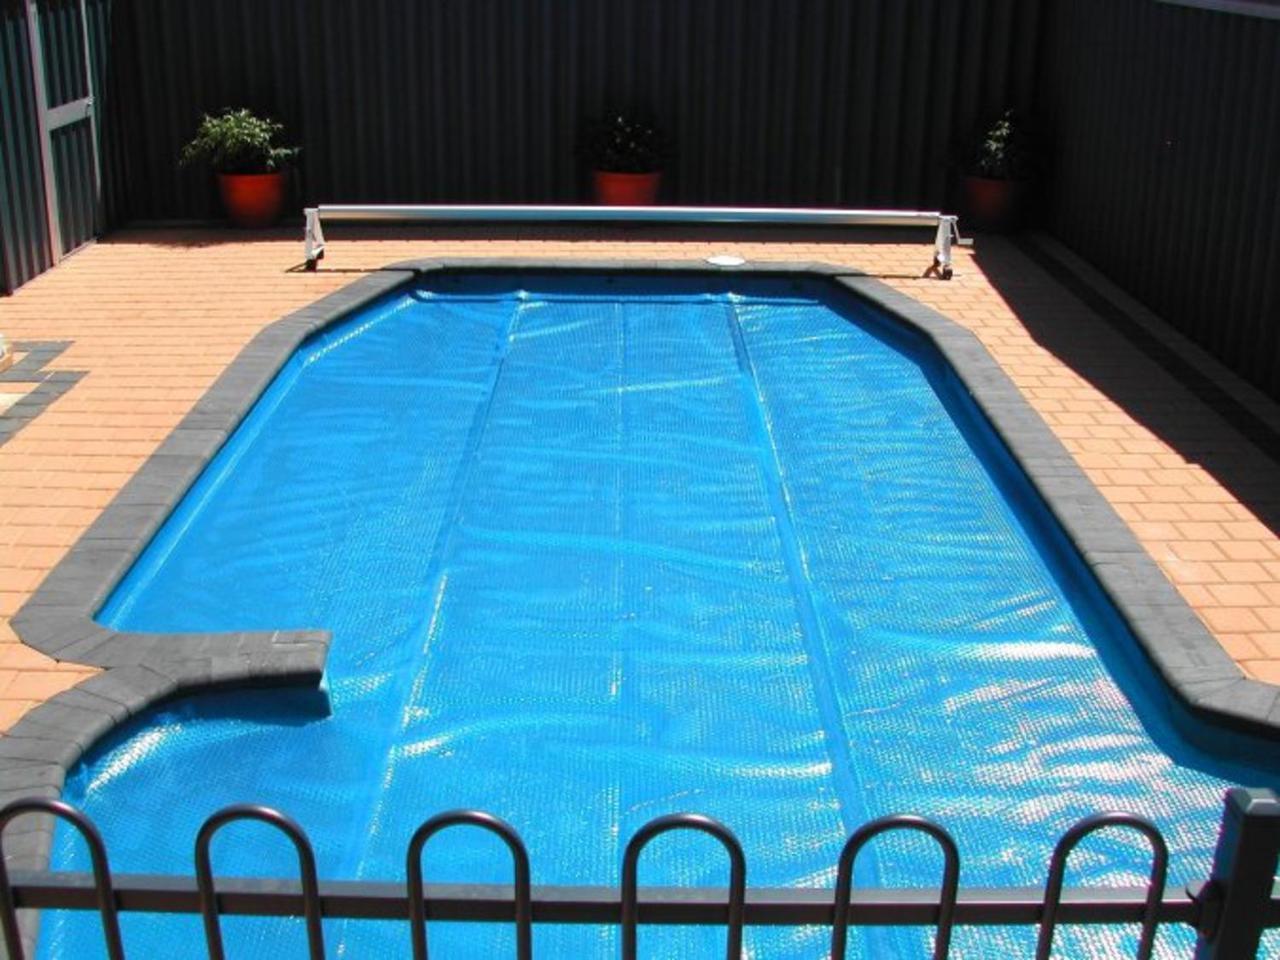 solar pool cover